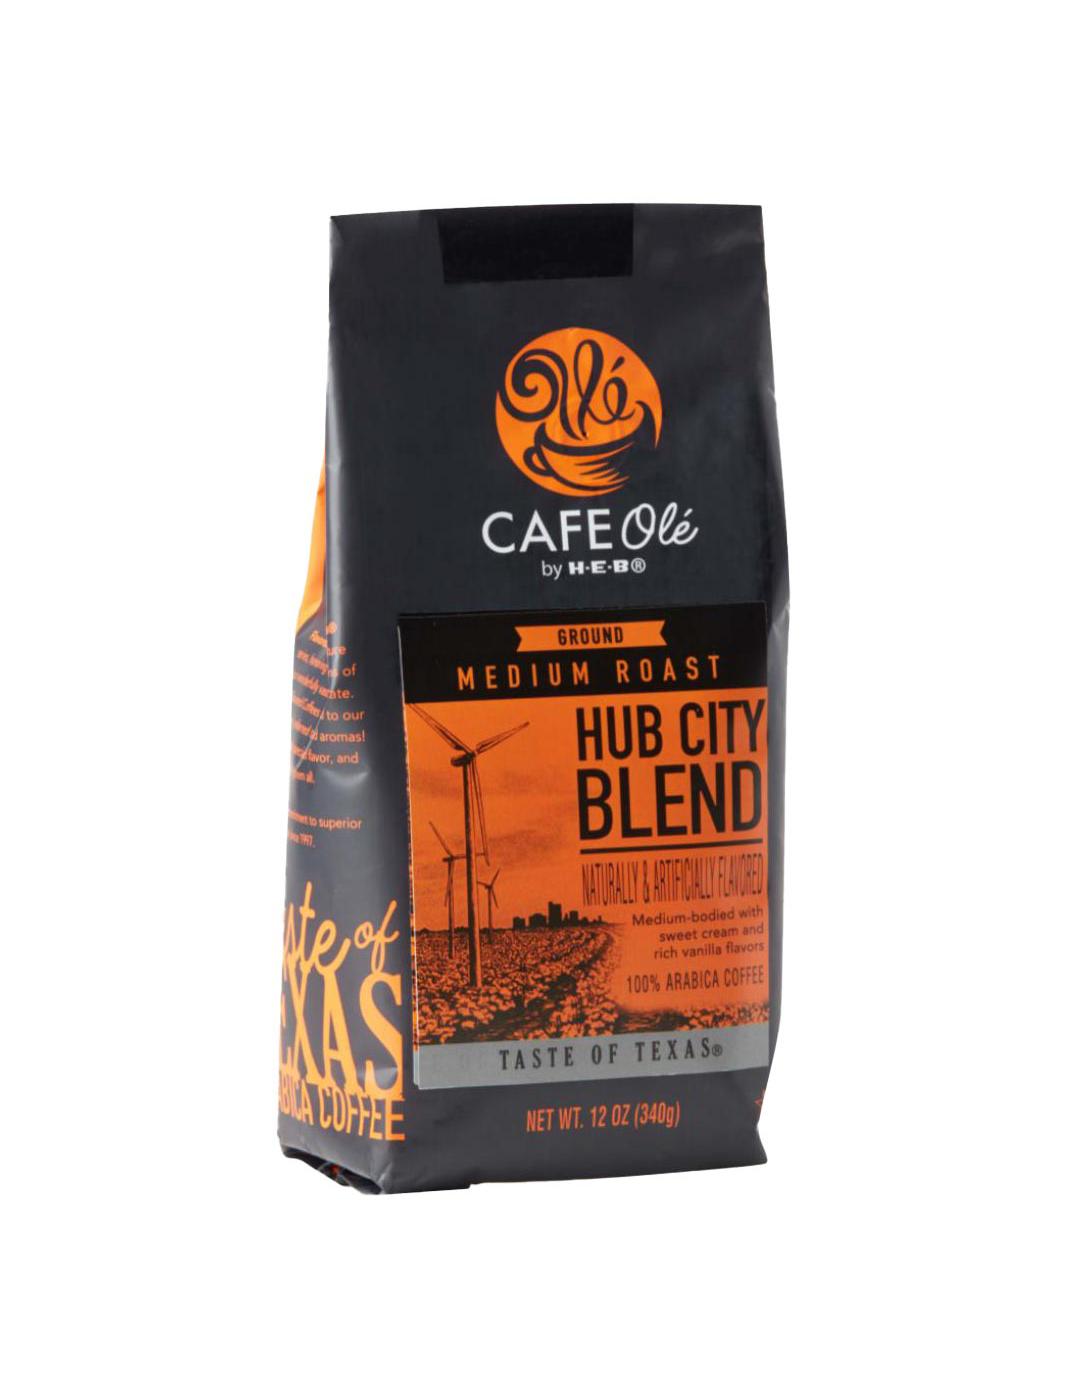 CAFE Olé by H-E-B Medium Roast Hub City Blend Ground Coffee; image 2 of 2